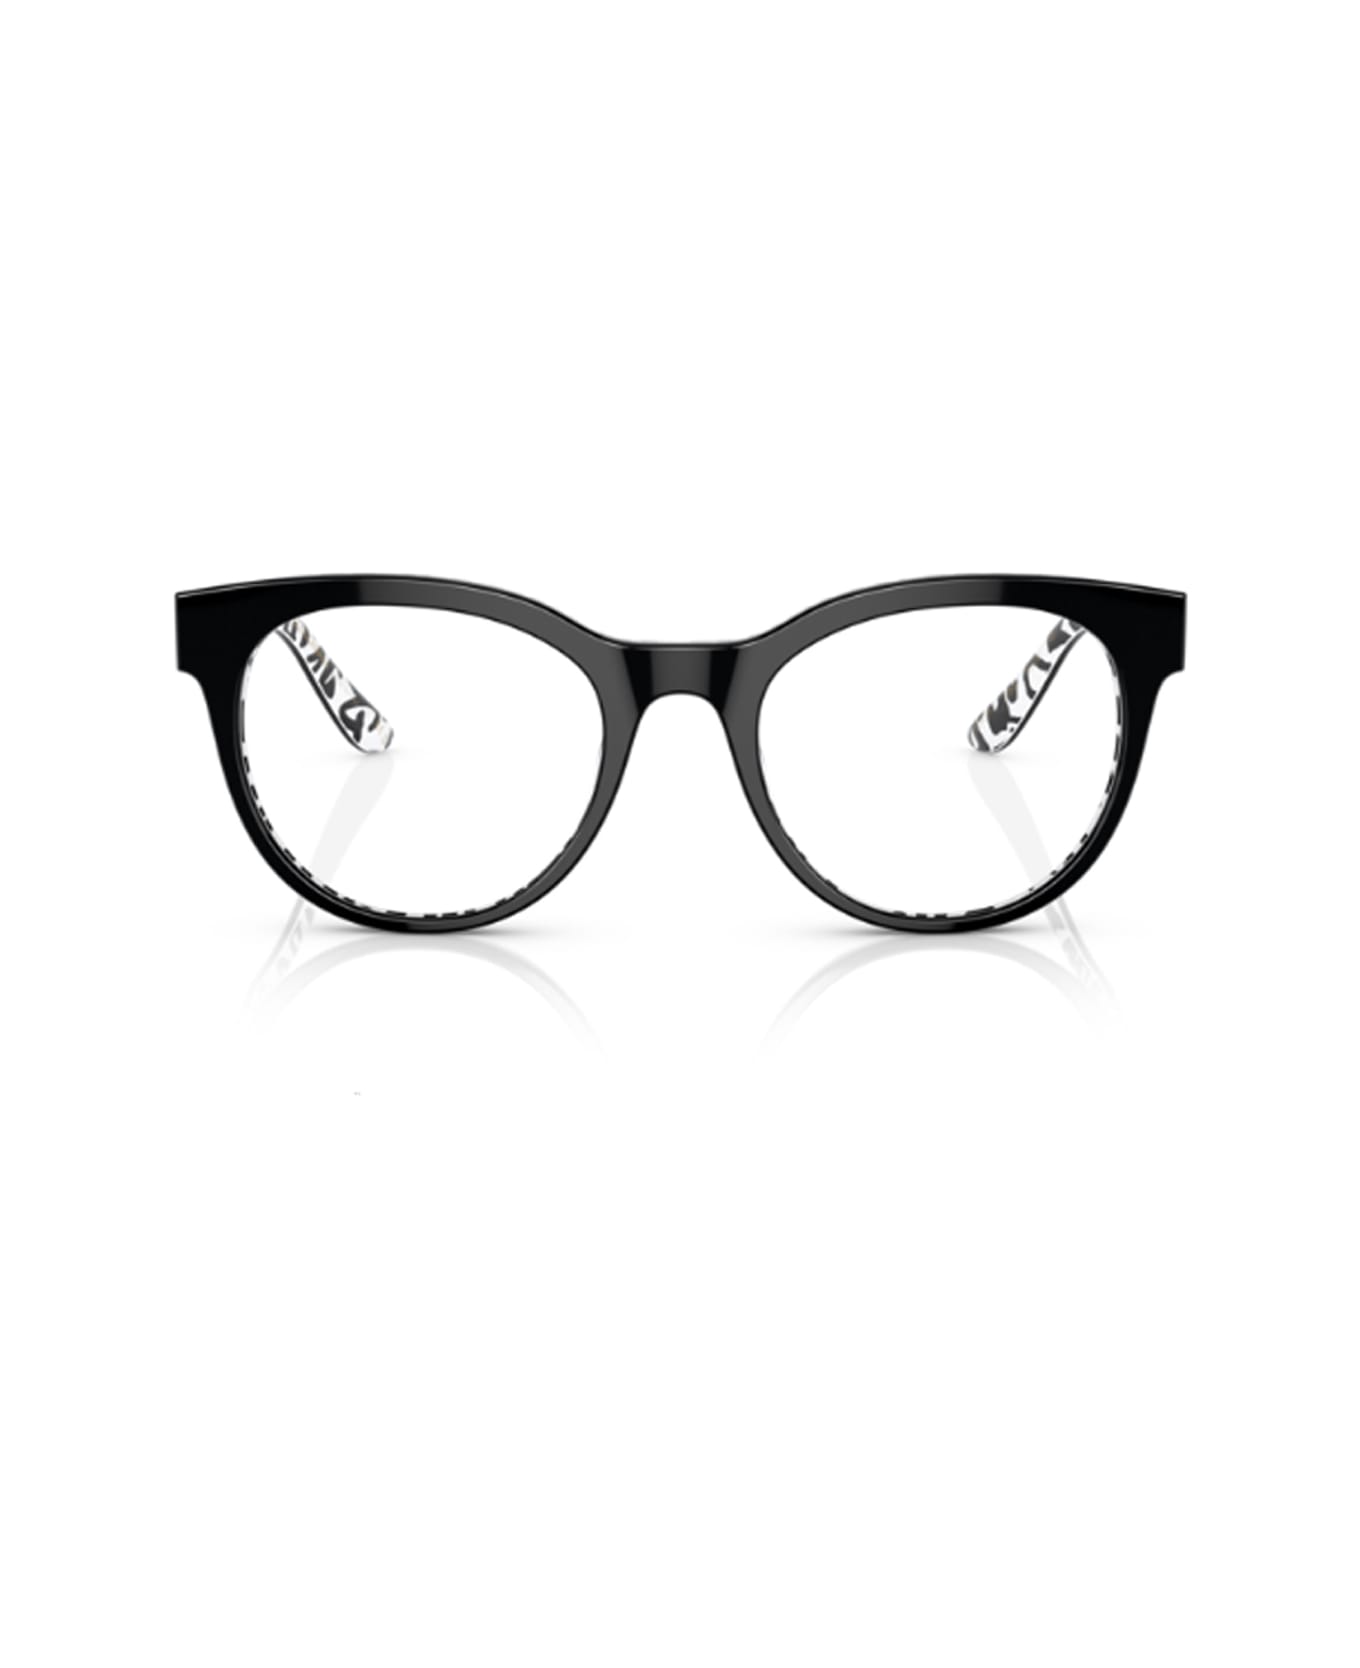 Dolce & Gabbana Eyewear Dg3334 3389 Glasses - Nero アイウェア